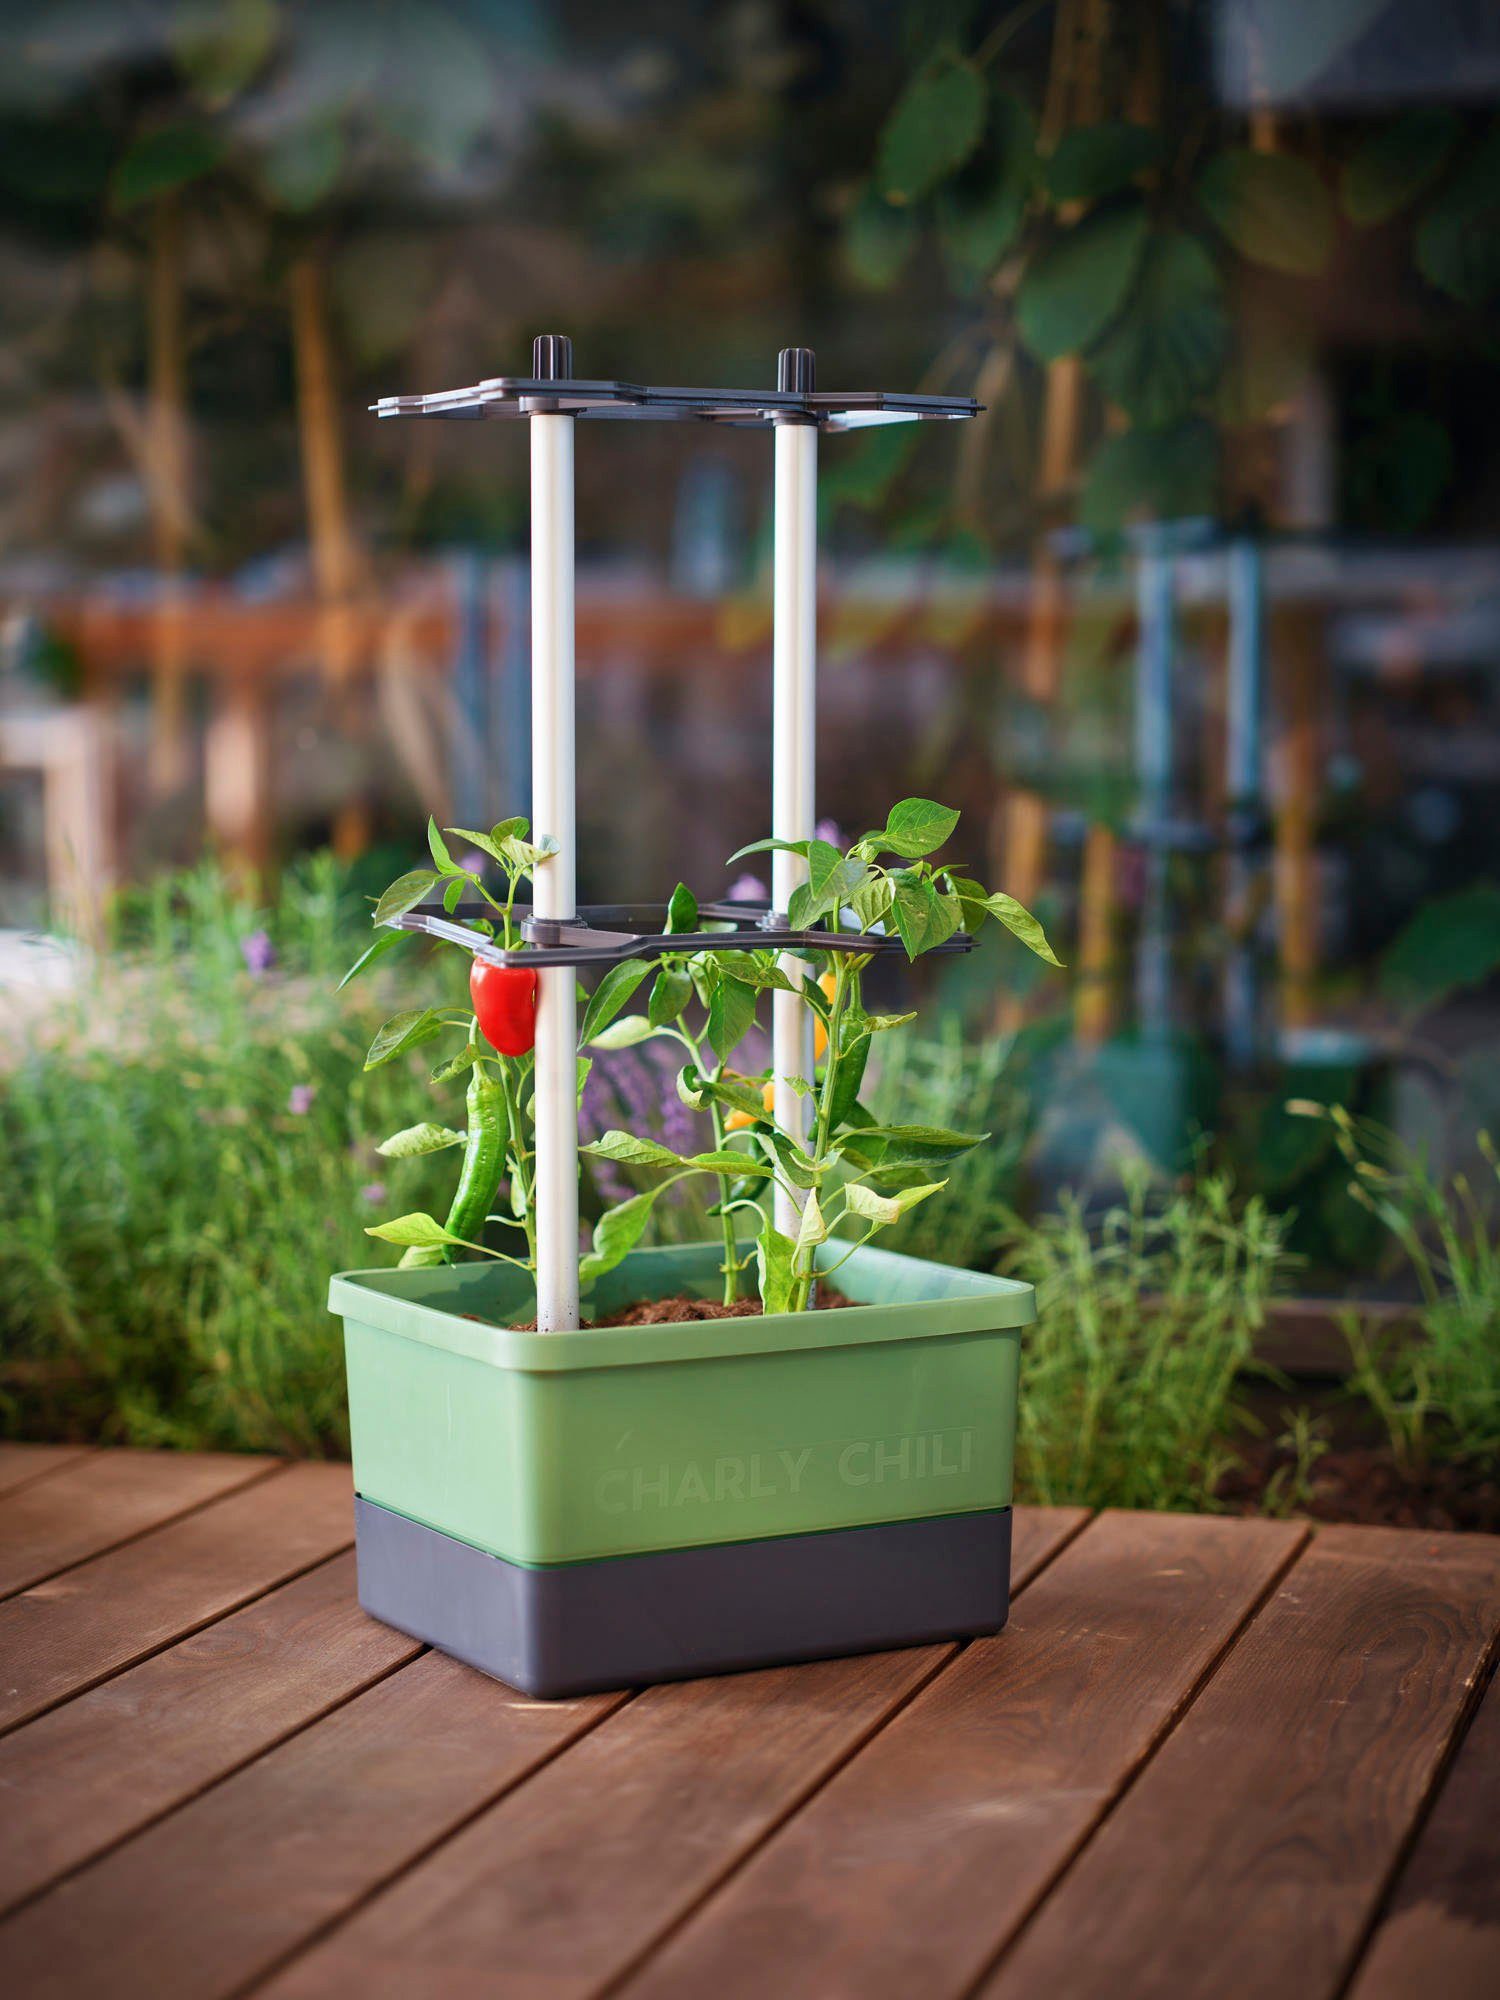 Wassertank Chilitopf, Pflanzkübel dunkelgrün Ranksystem CHARLY & Gusta mit Garden CHILI